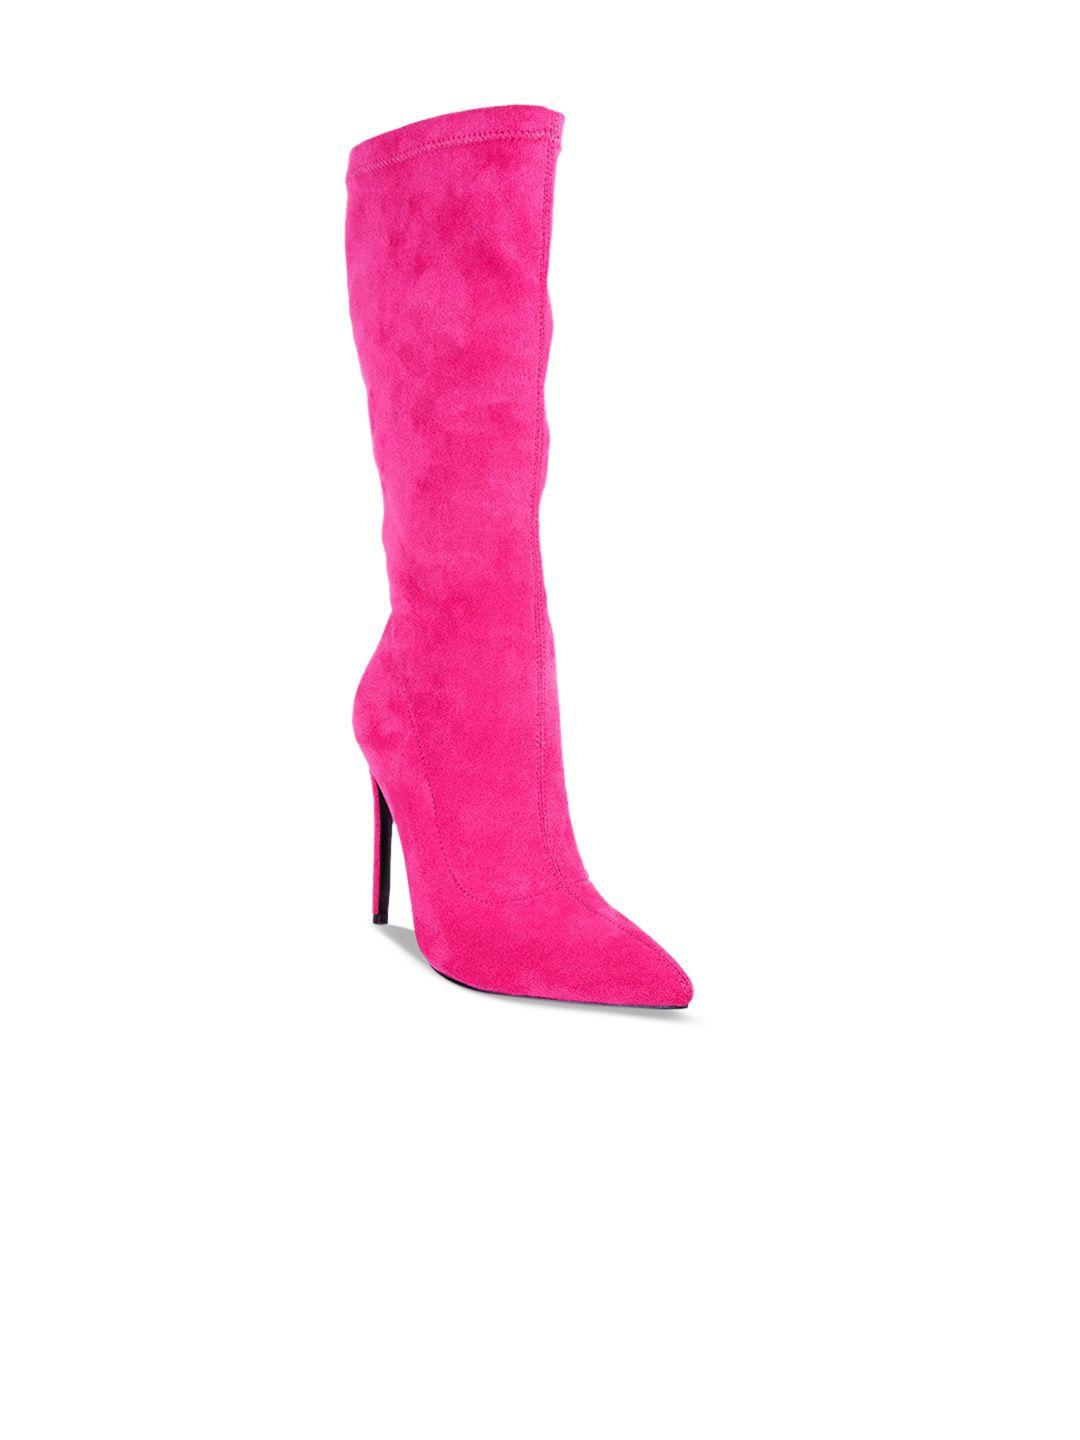 london rag women stiletto heel high-top winter boot